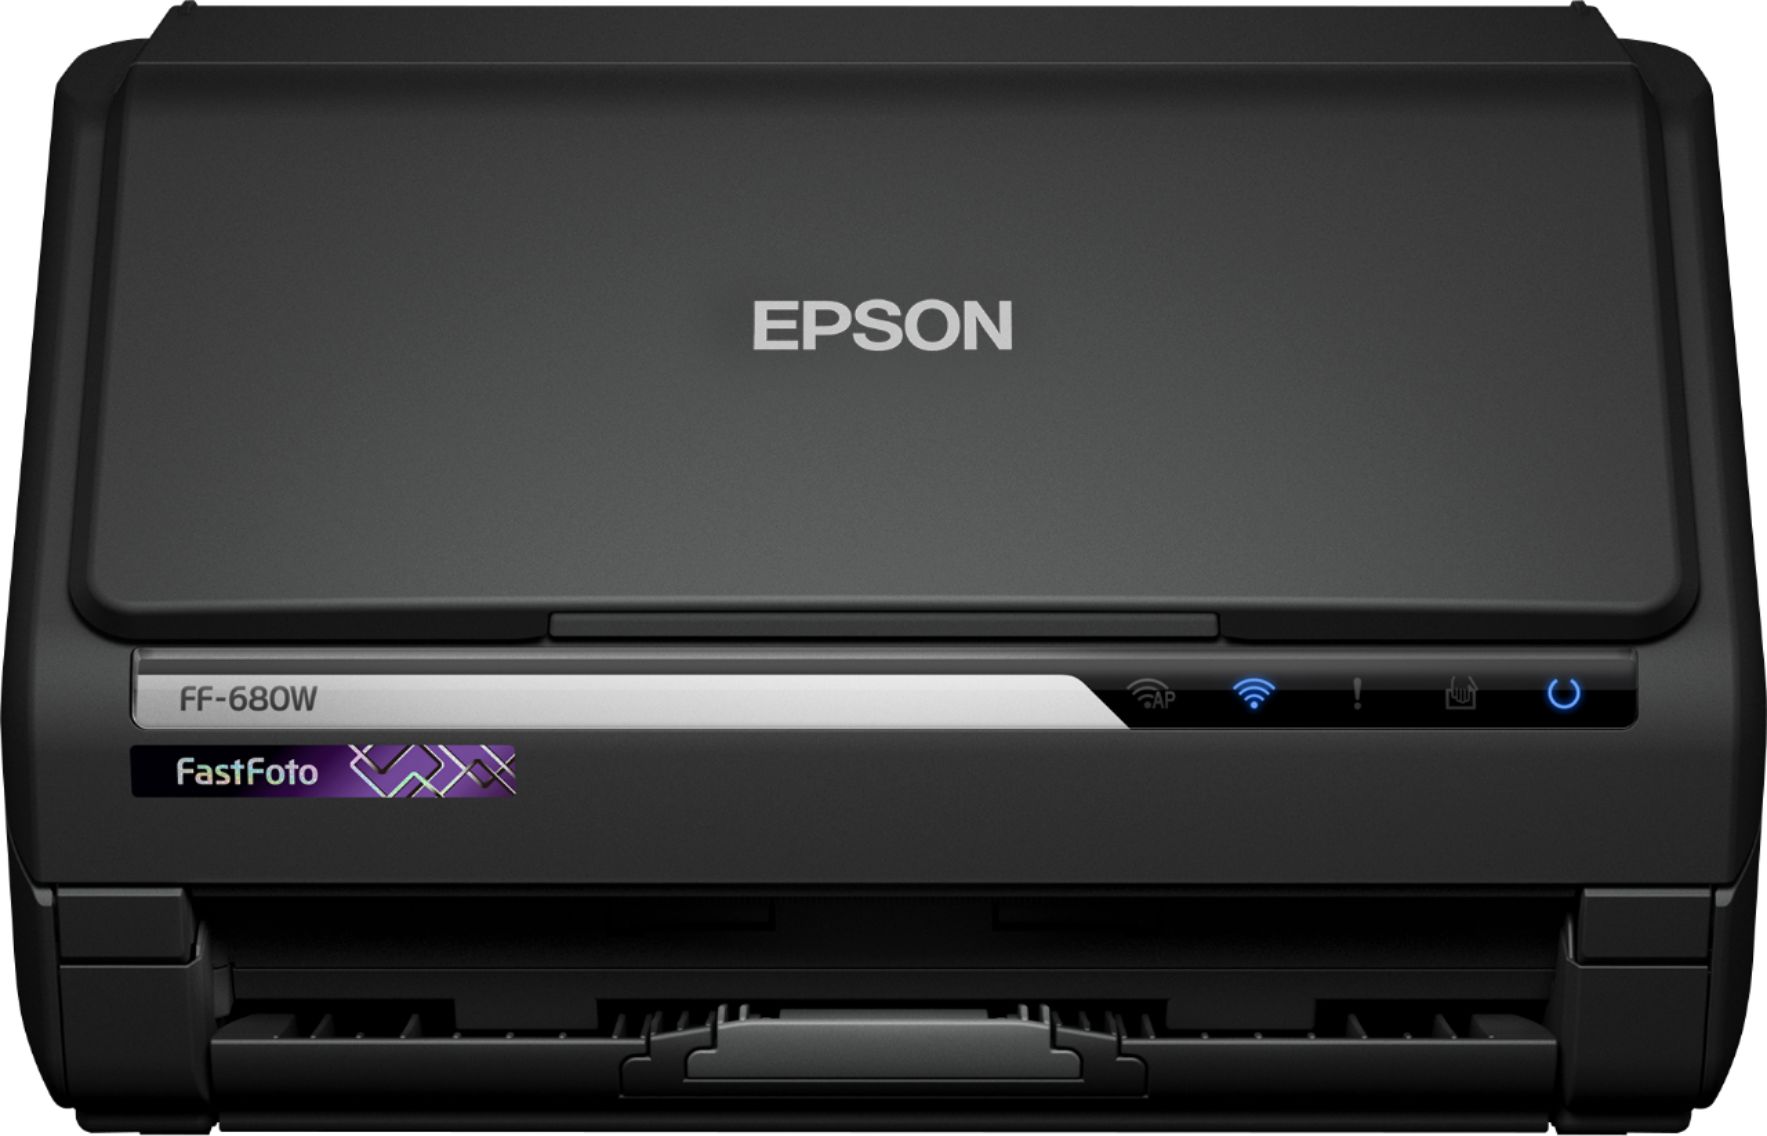 PC/タブレット PC周辺機器 Epson FastFoto FF-680W Wireless High-speed Photo Scanning System 